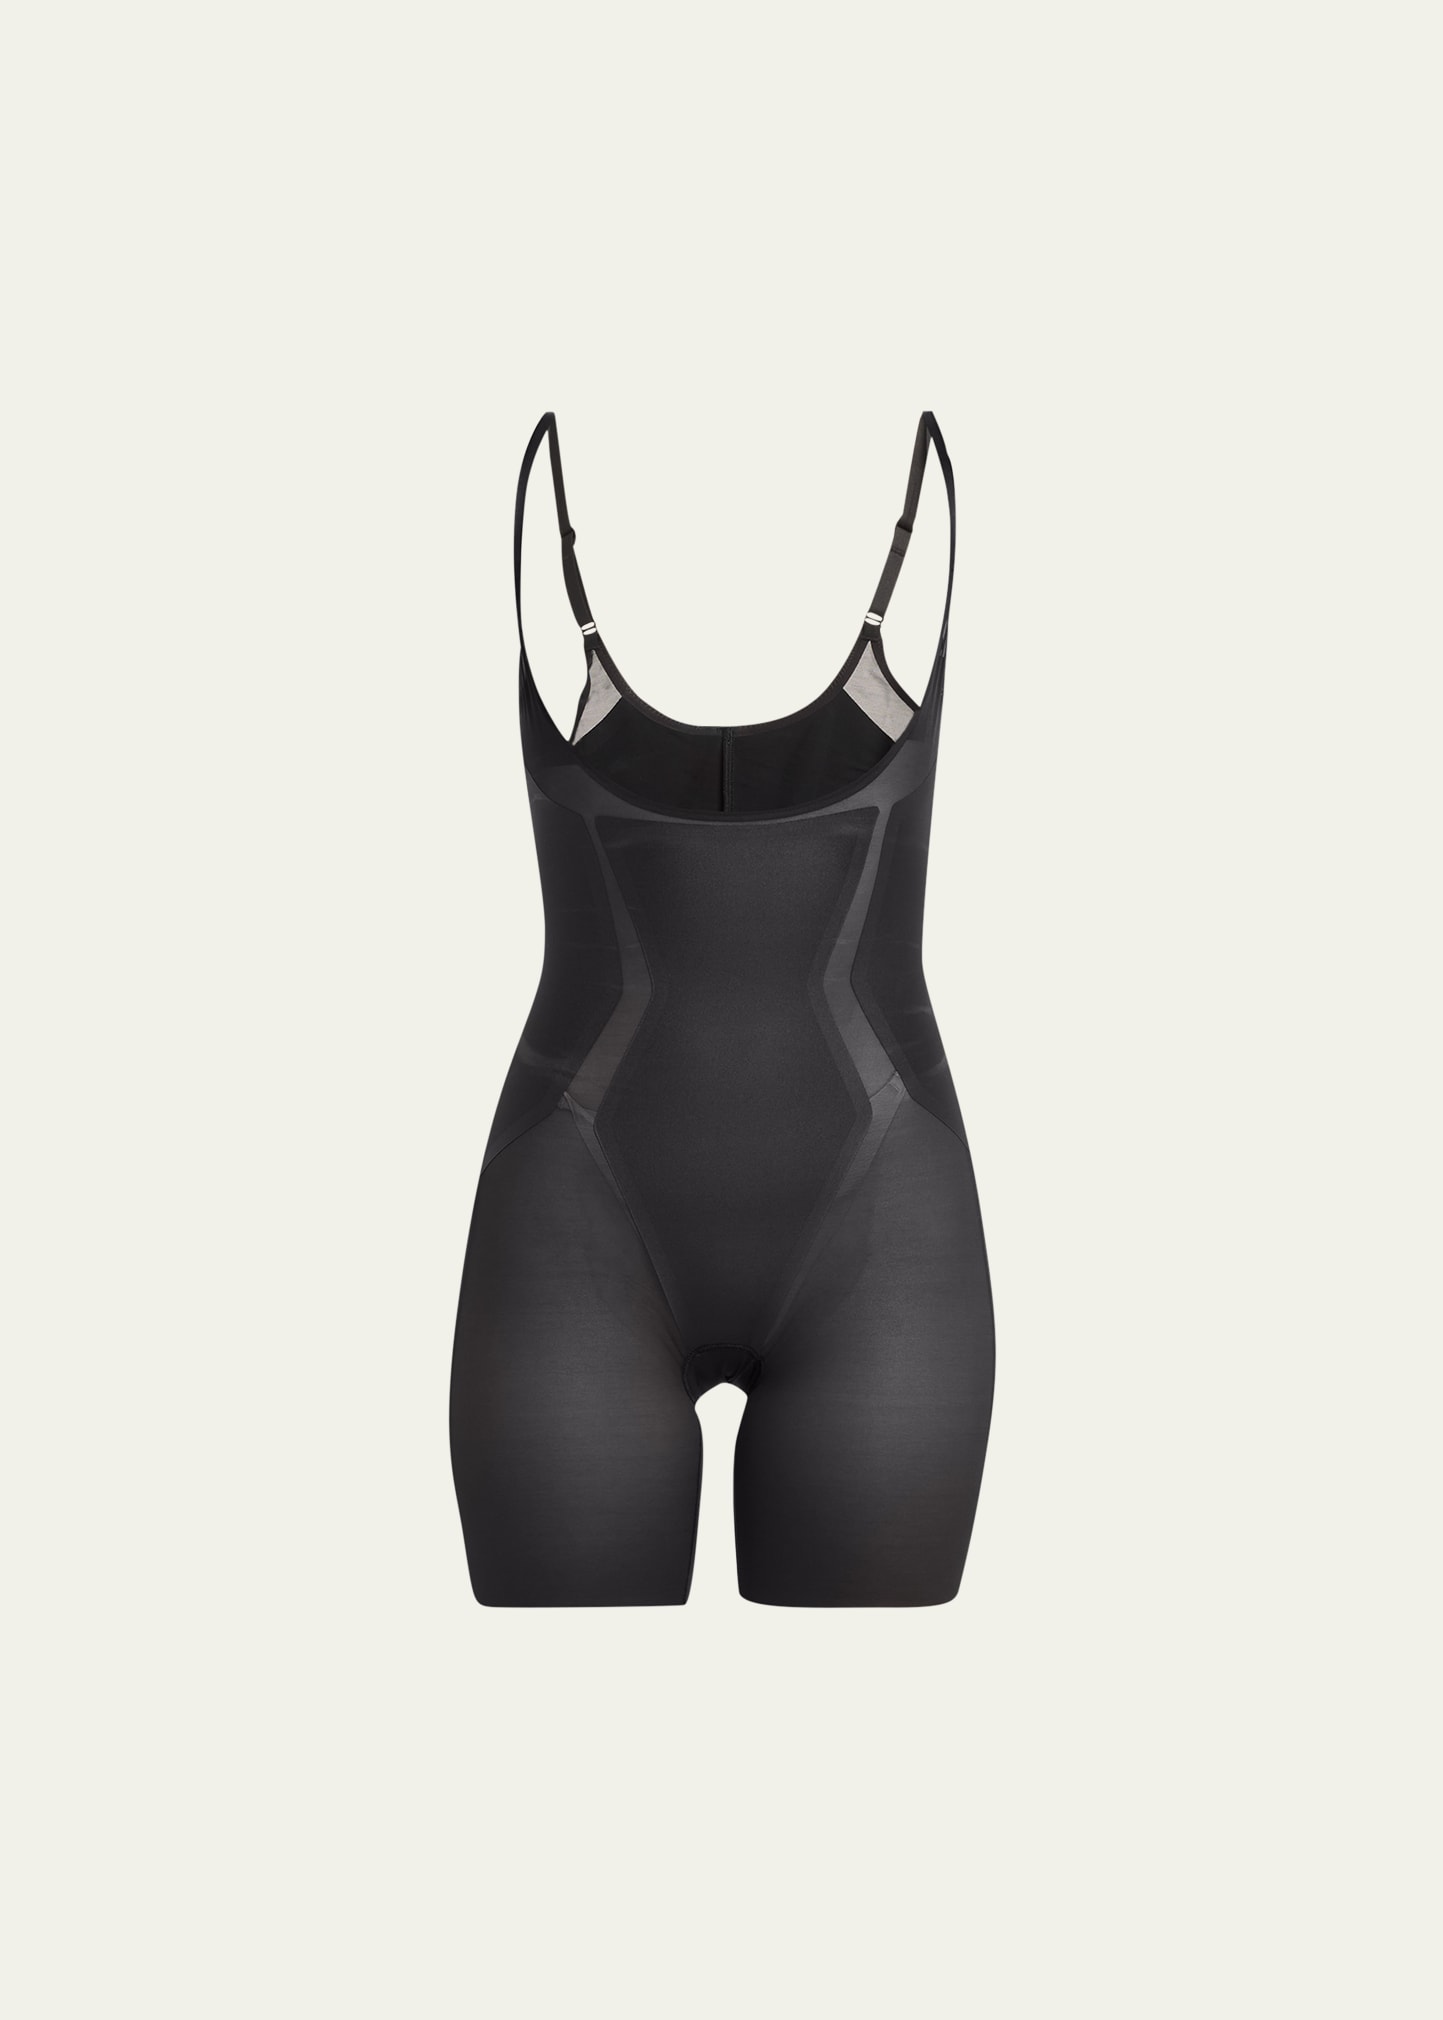 Womens SPANX black Open-Bust Mid-Thigh Bodysuit